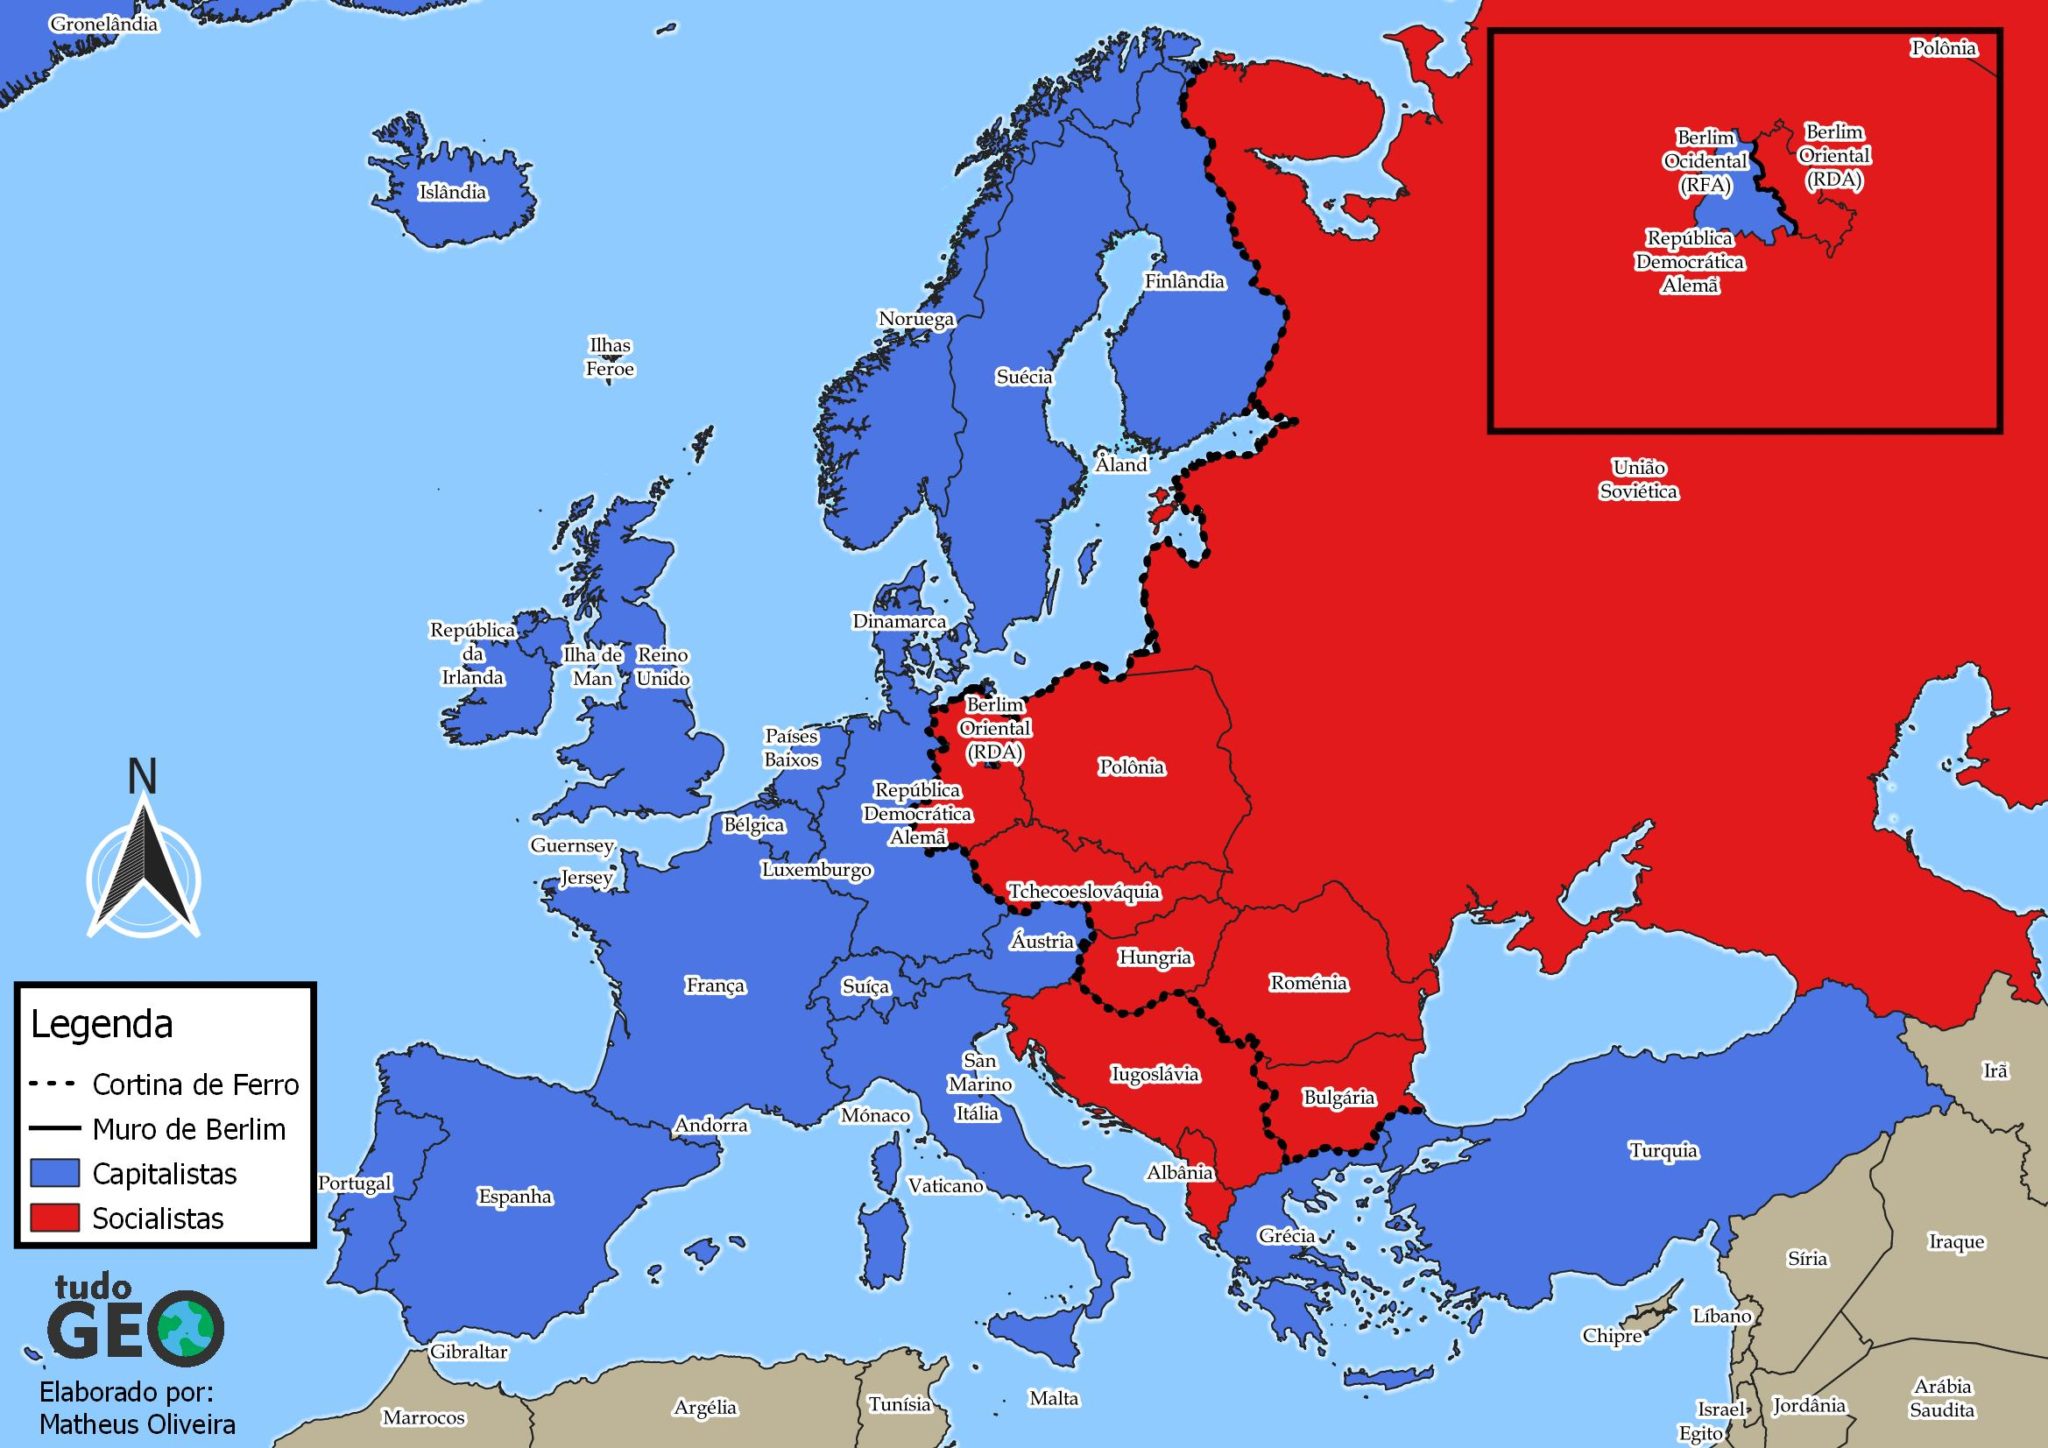 Mapa da cortina de ferro na Europa durante a Guerra Fria